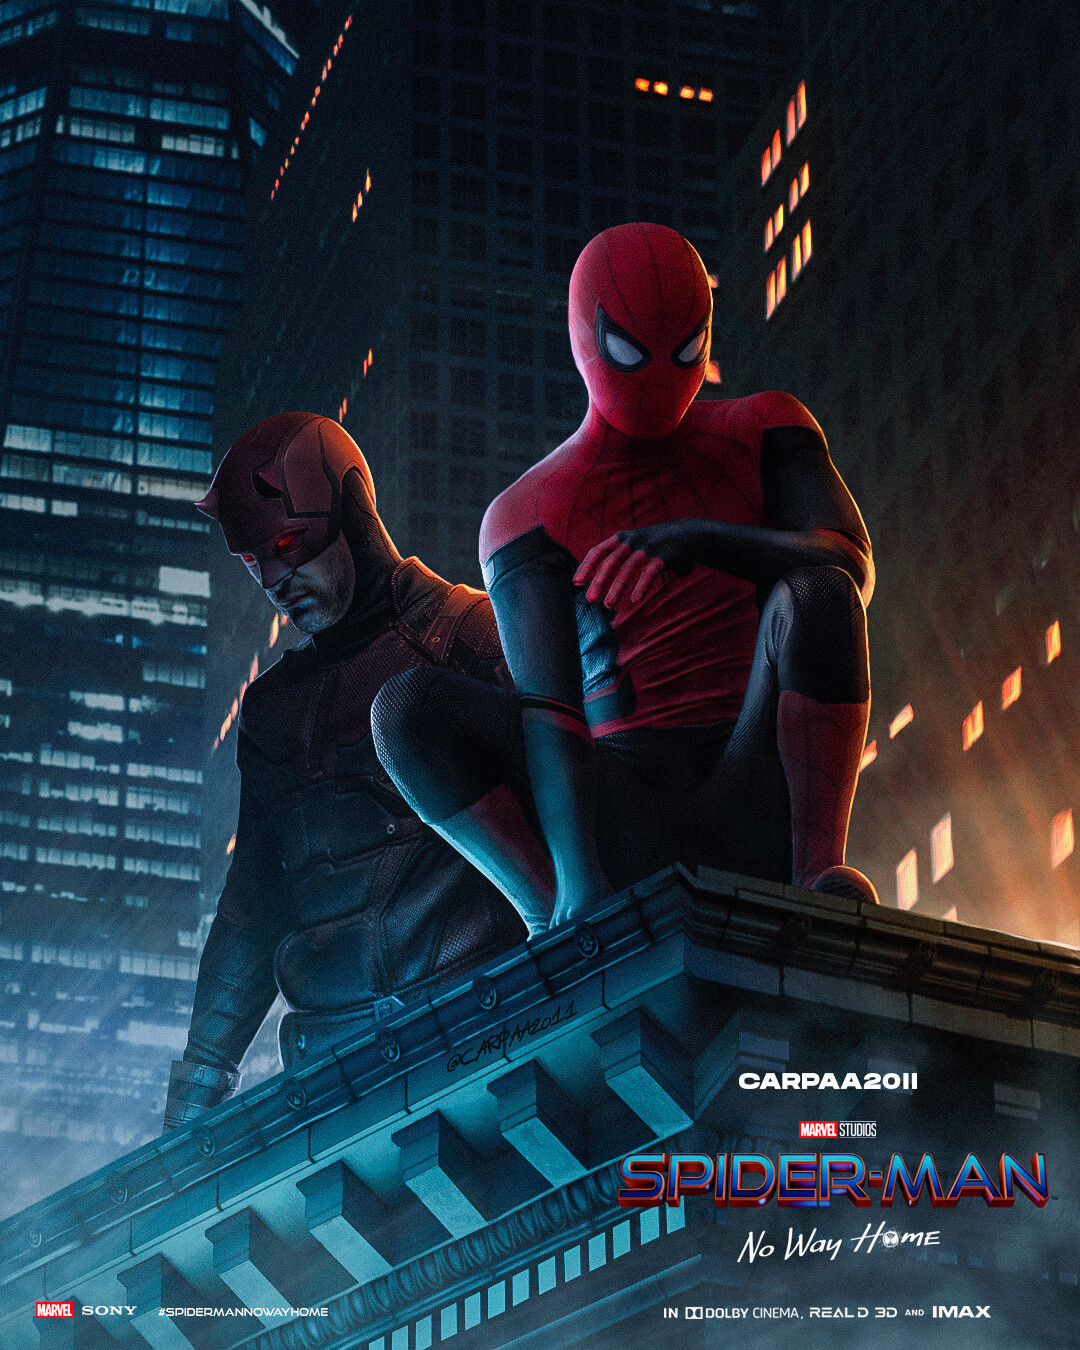 ArtStation - Fan Poster - Spiderman No Way Home